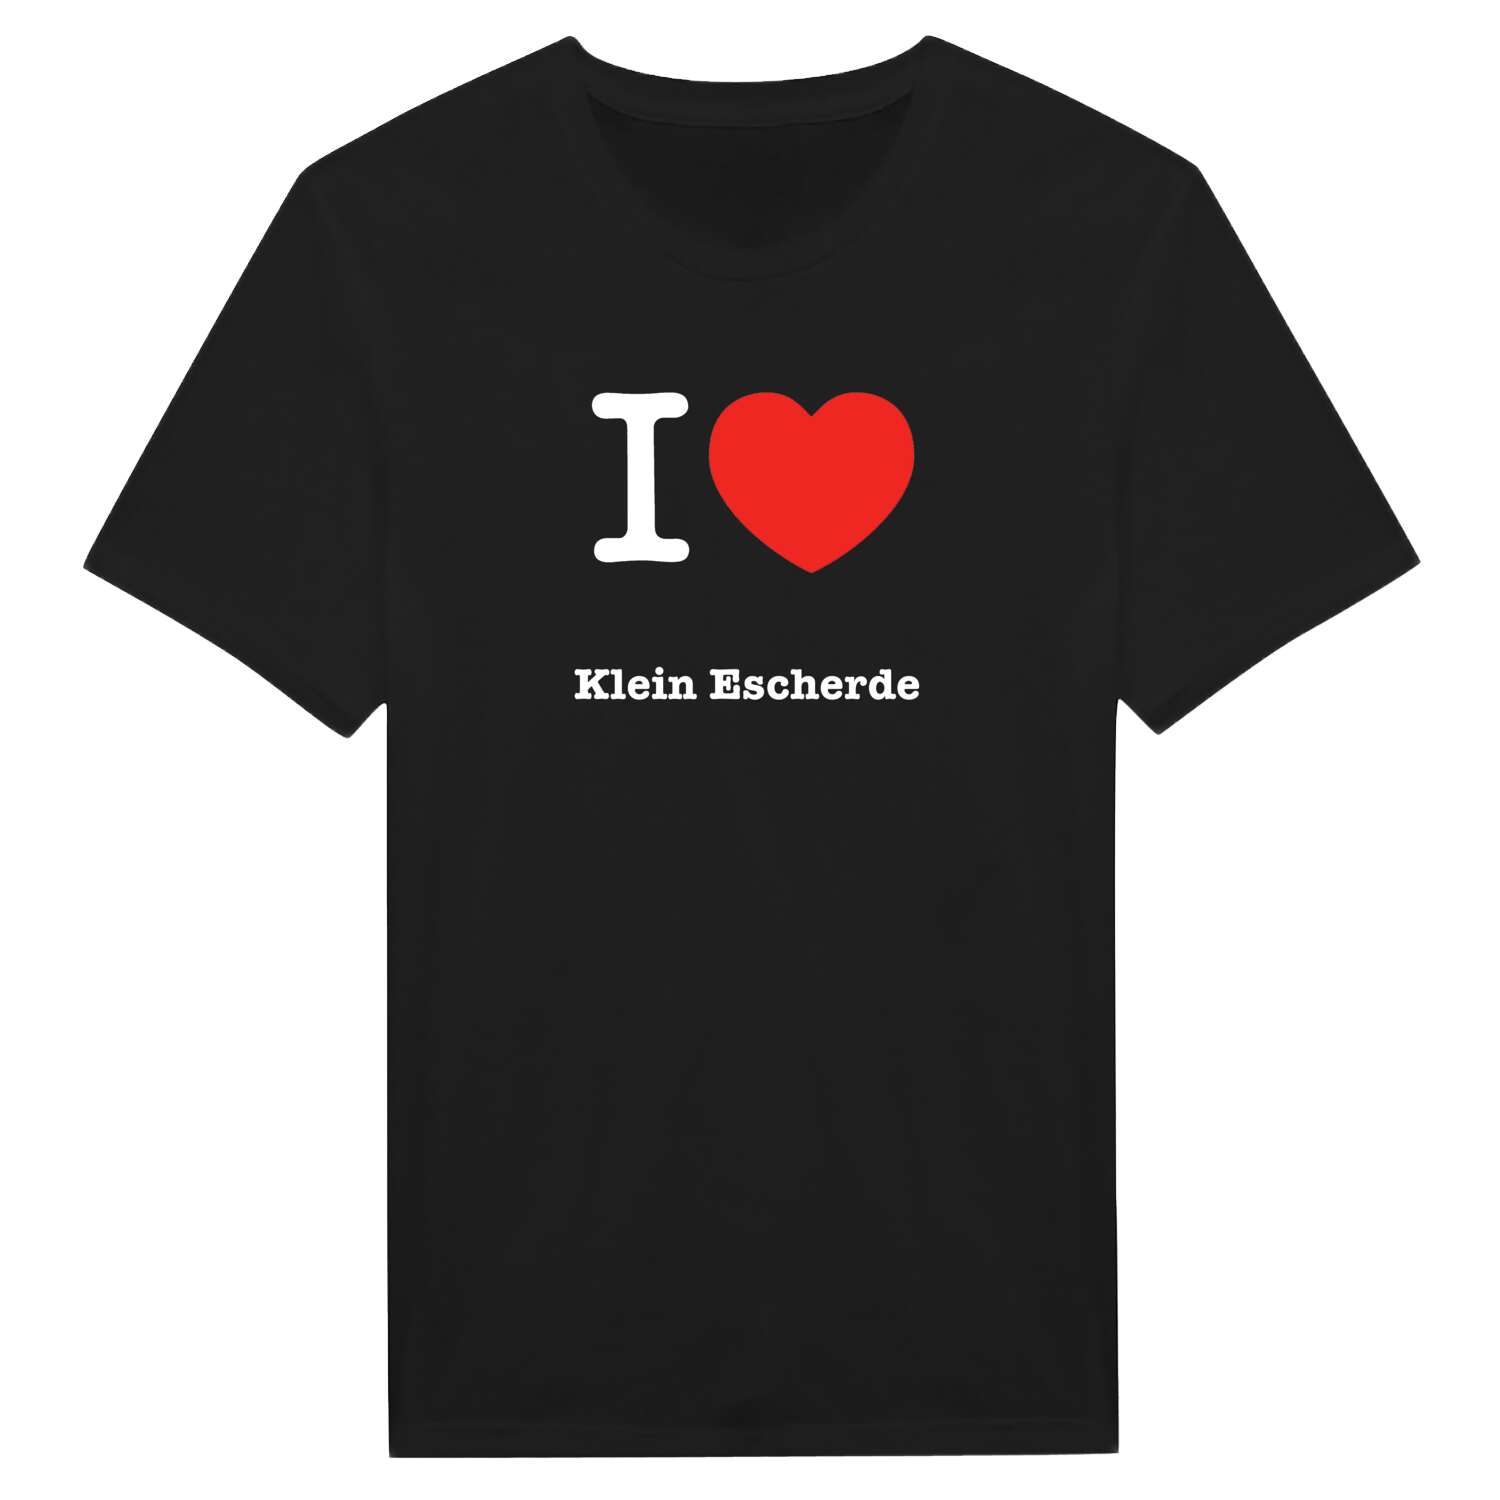 Klein Escherde T-Shirt »I love«